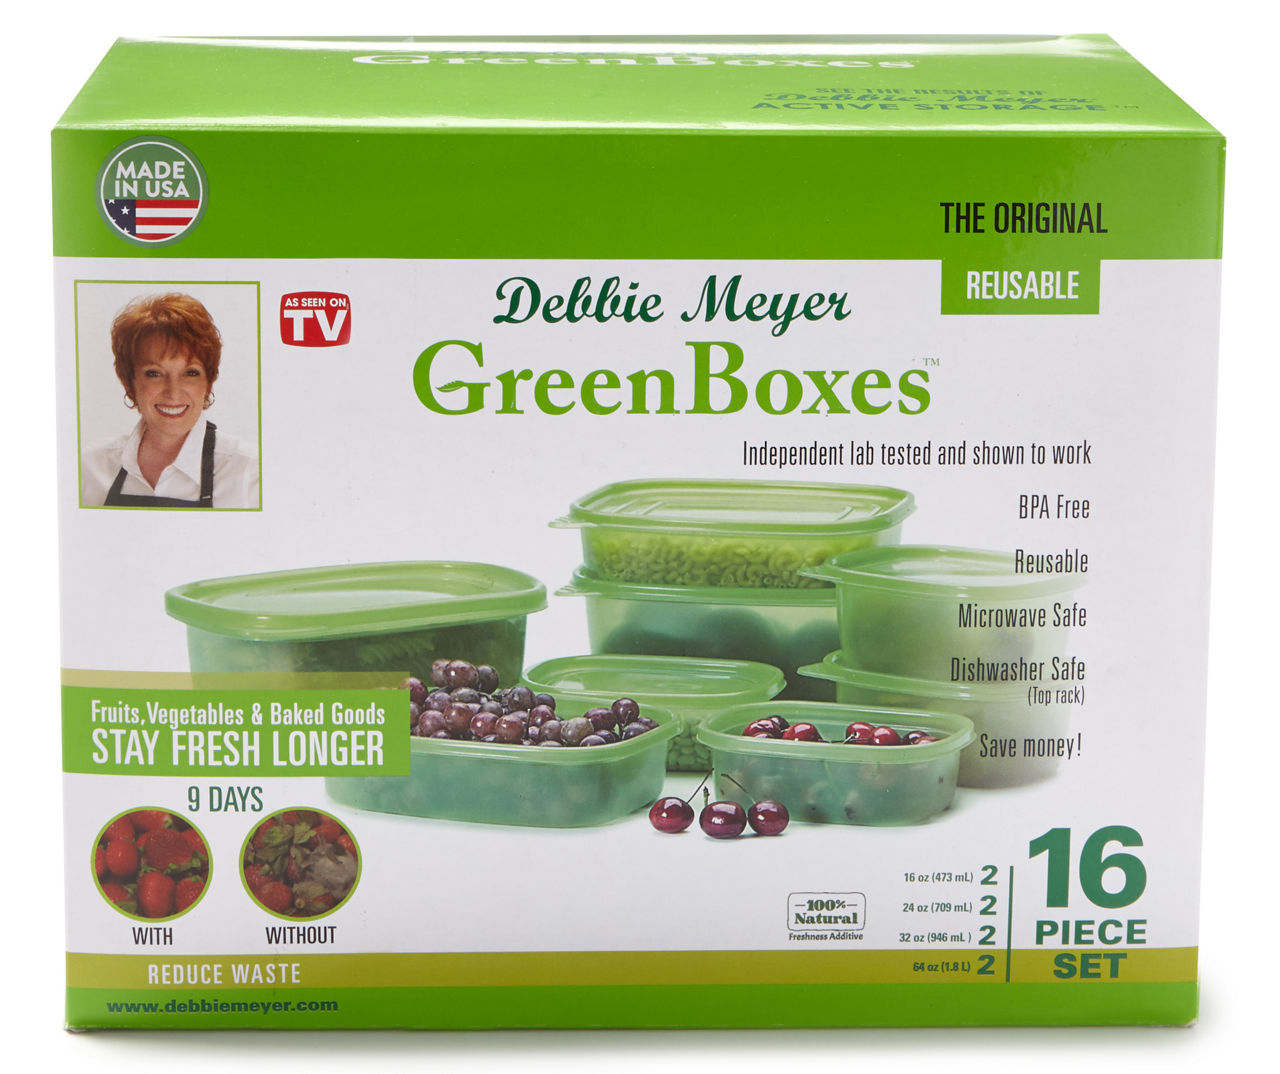 Debbie Meyer Green Bags